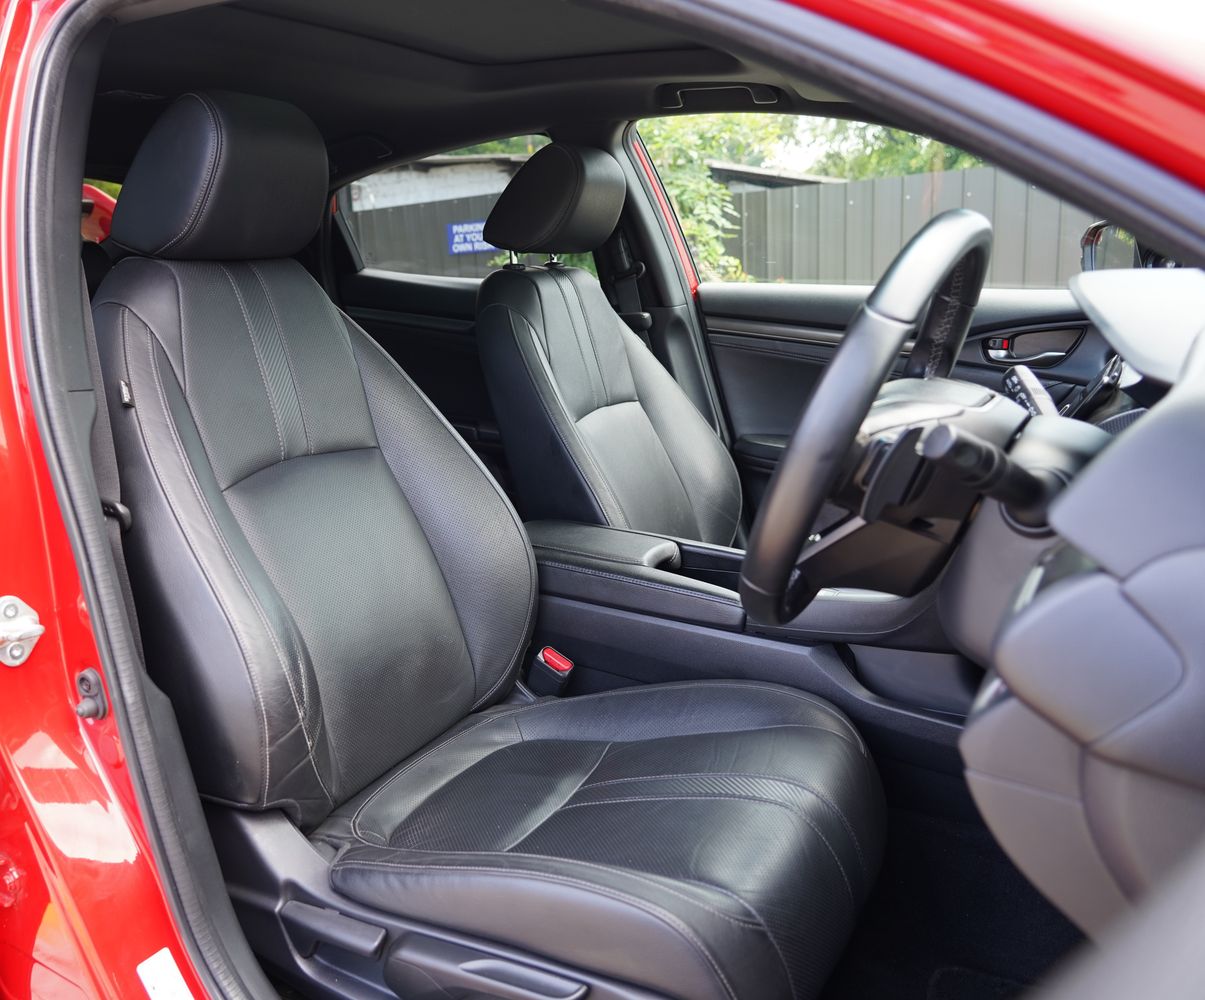 Honda Civic front interior